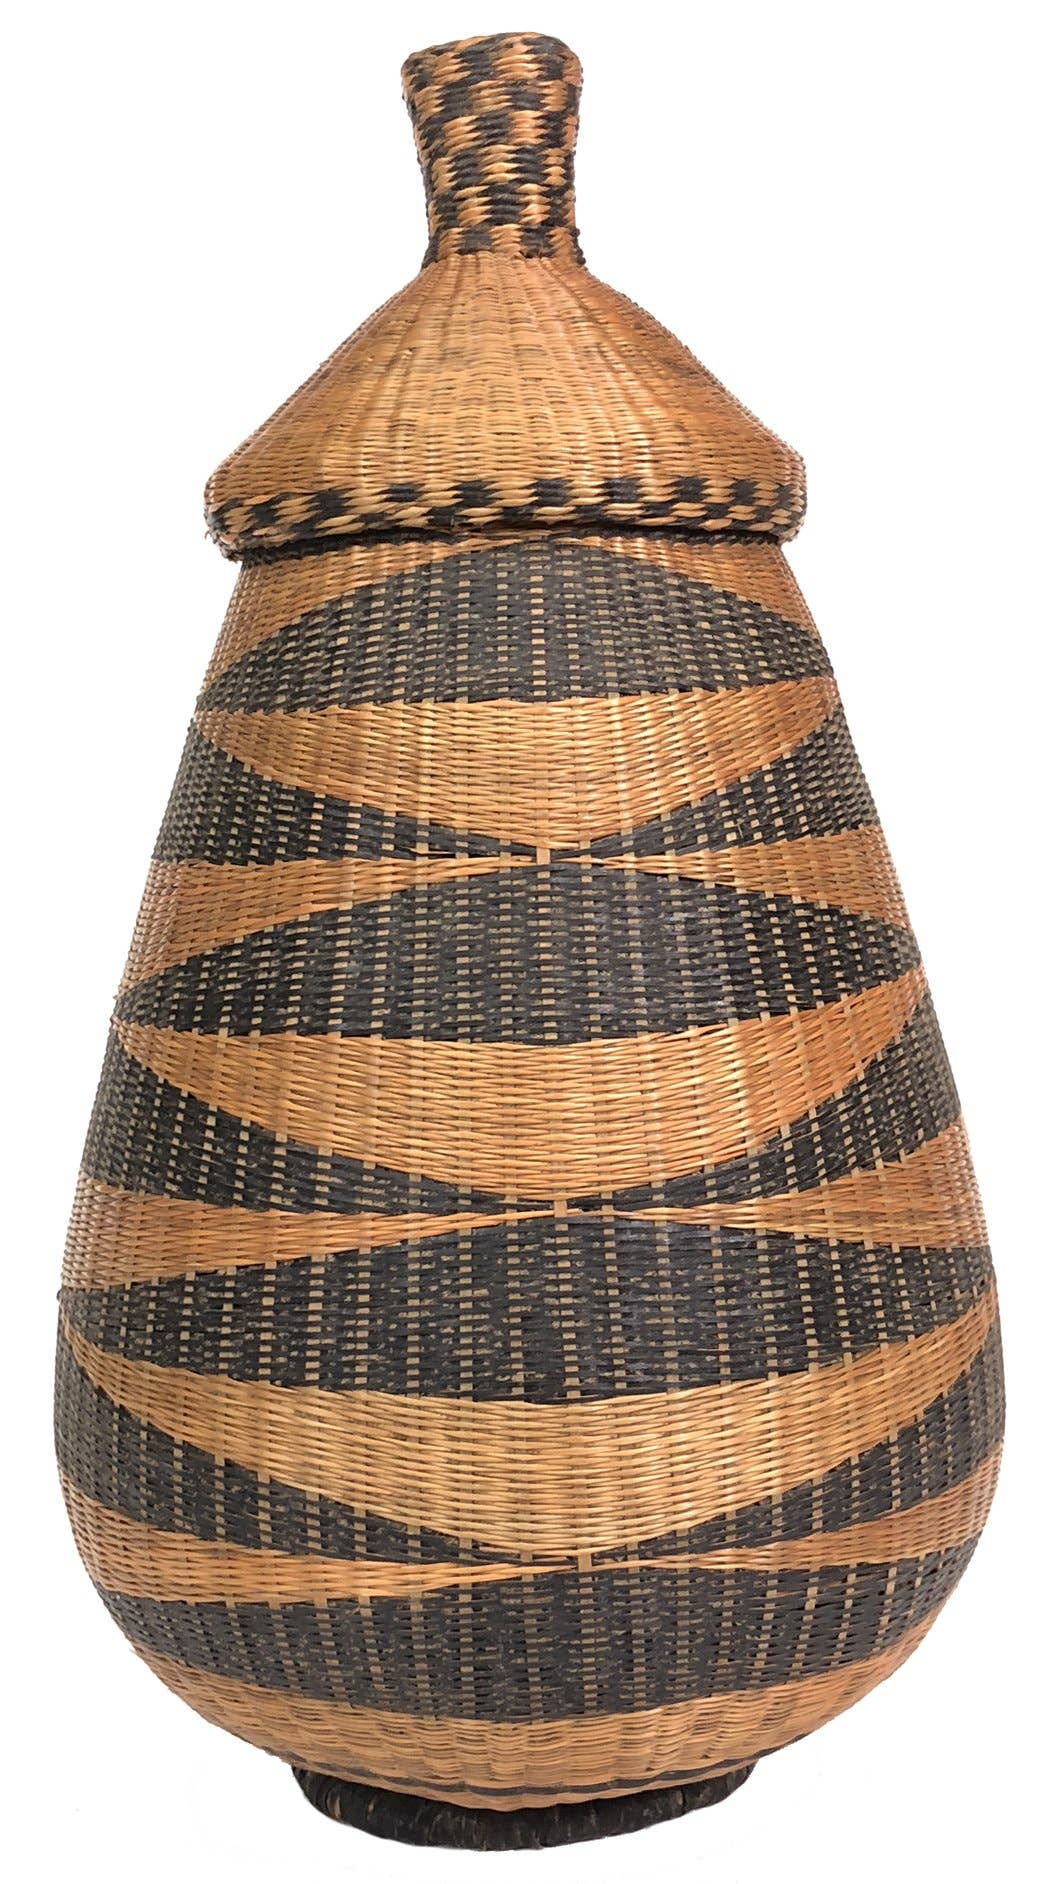 The Niger Bend - Vintage Tutsi Basket from Rwanda - Medium - 11